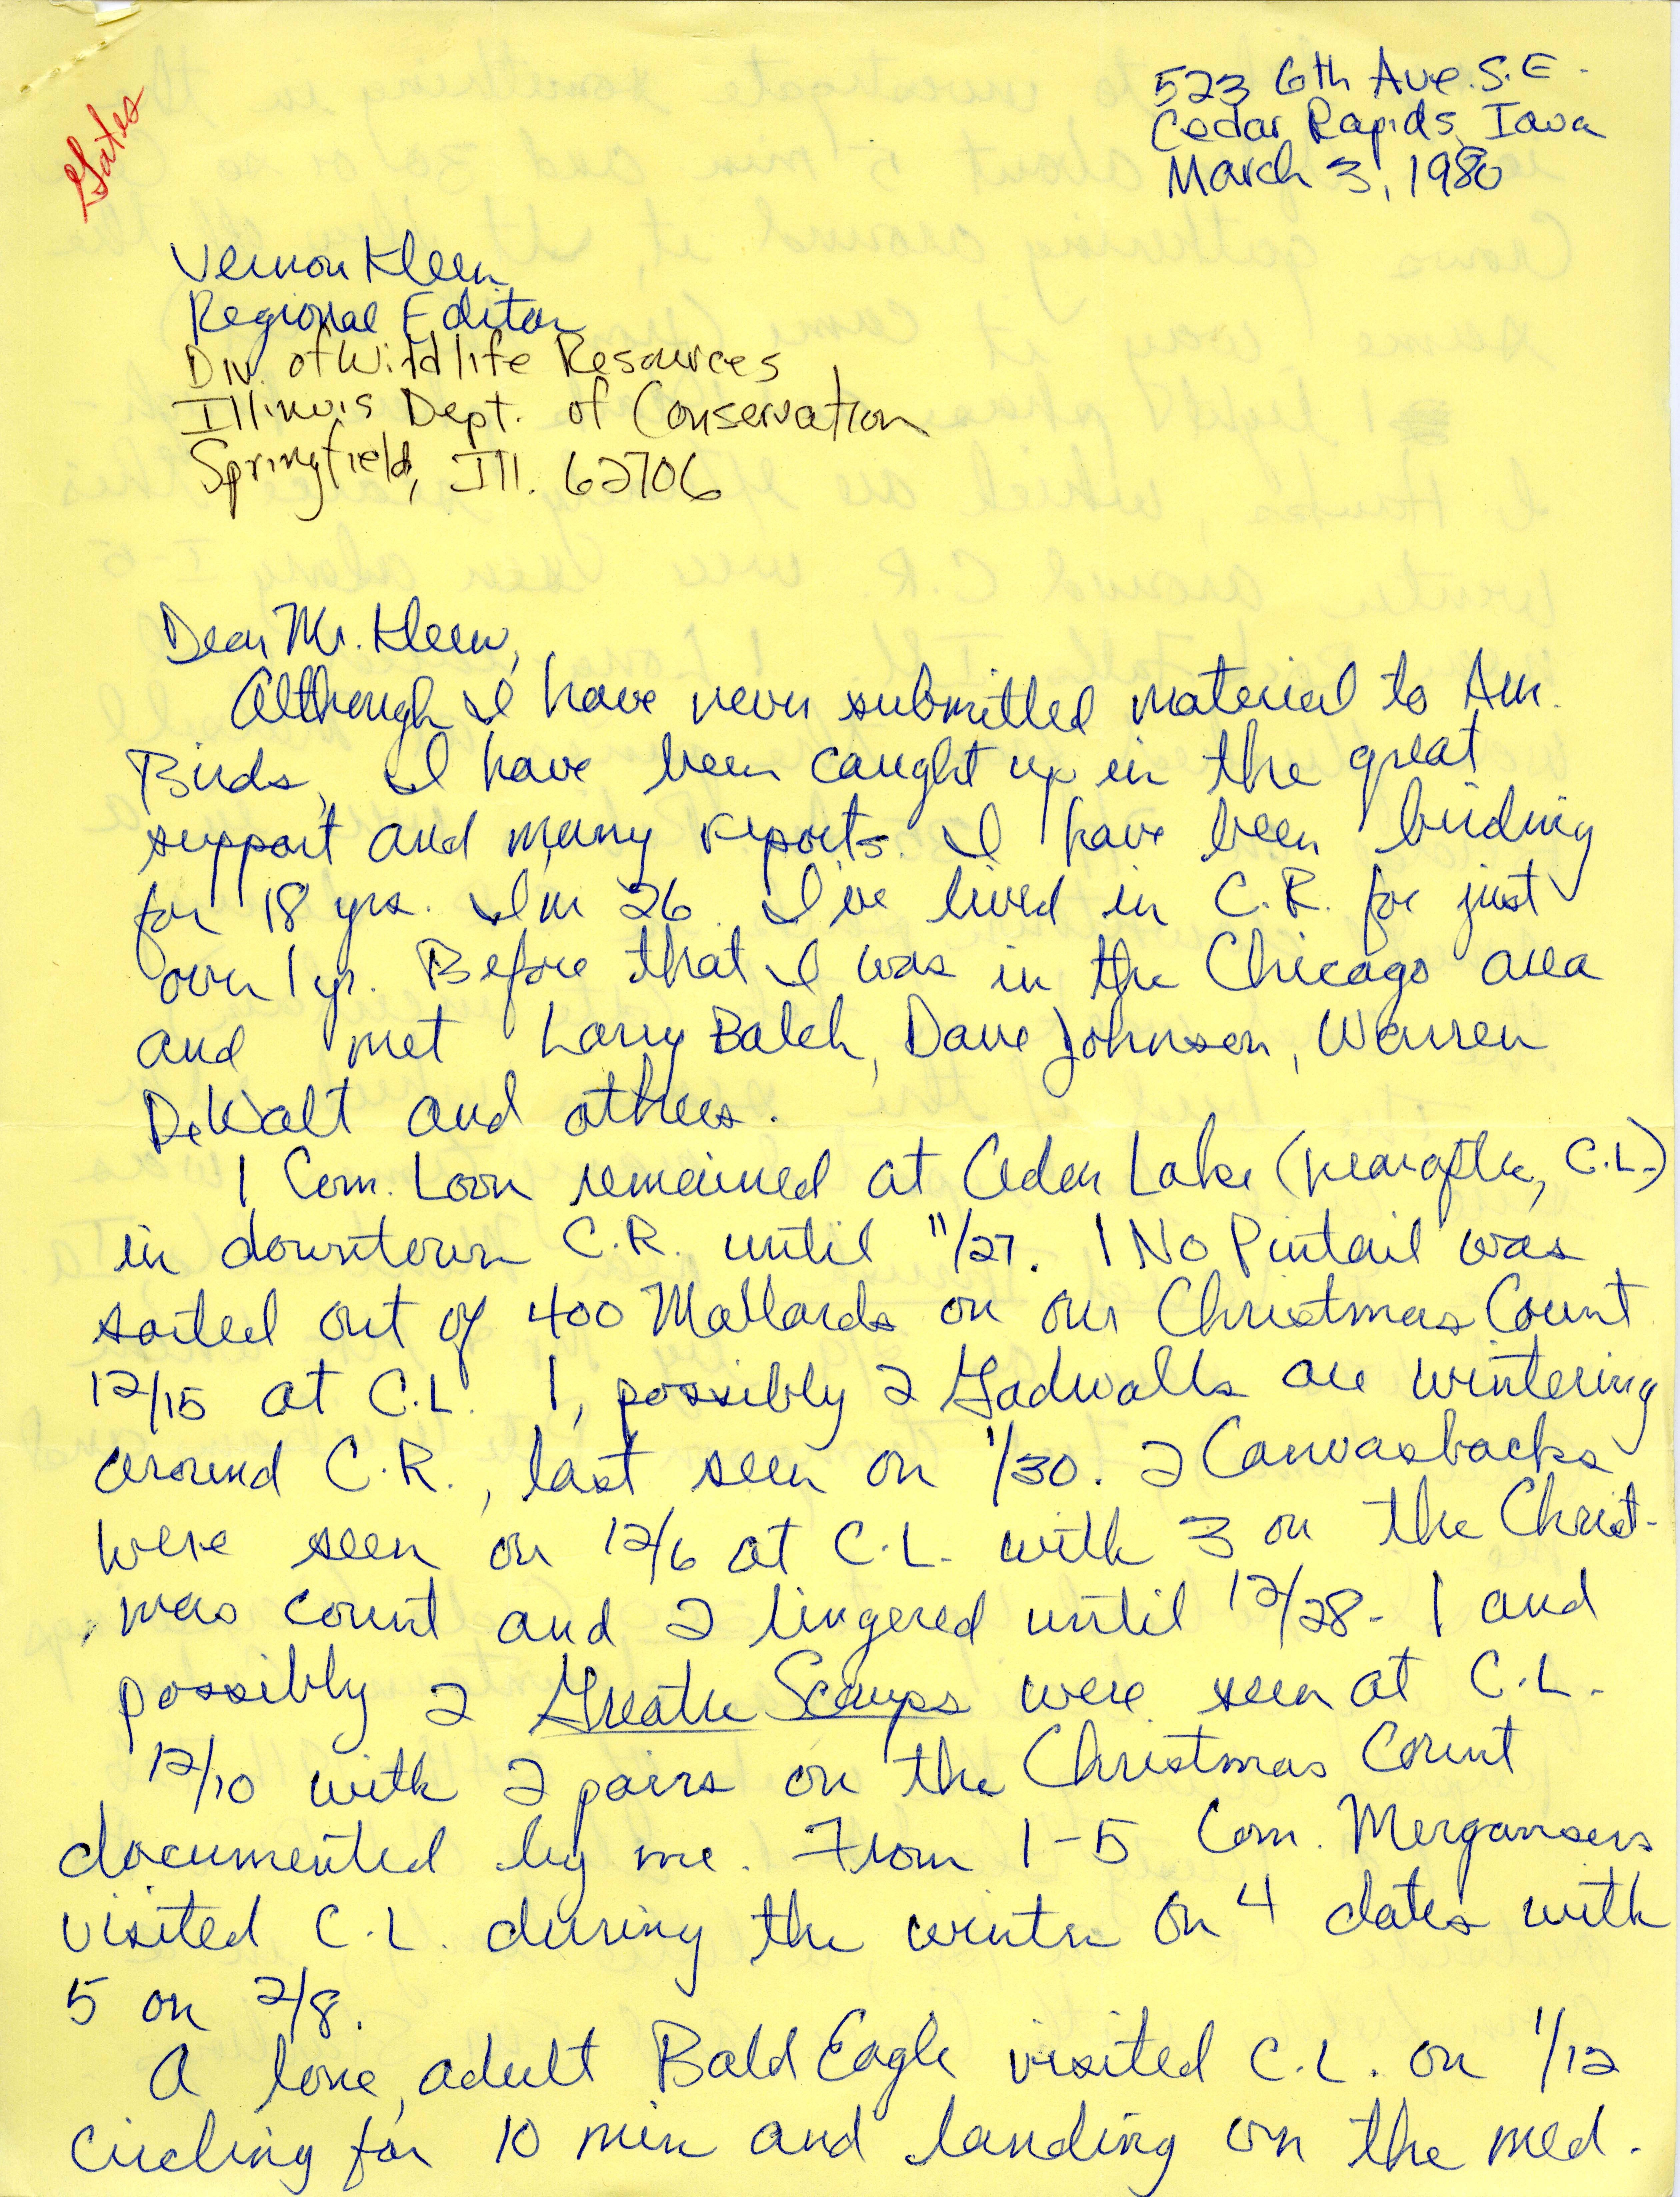 Tim Gates letter to Vernon M. Kleen regarding bird sightings, March 3, 1980